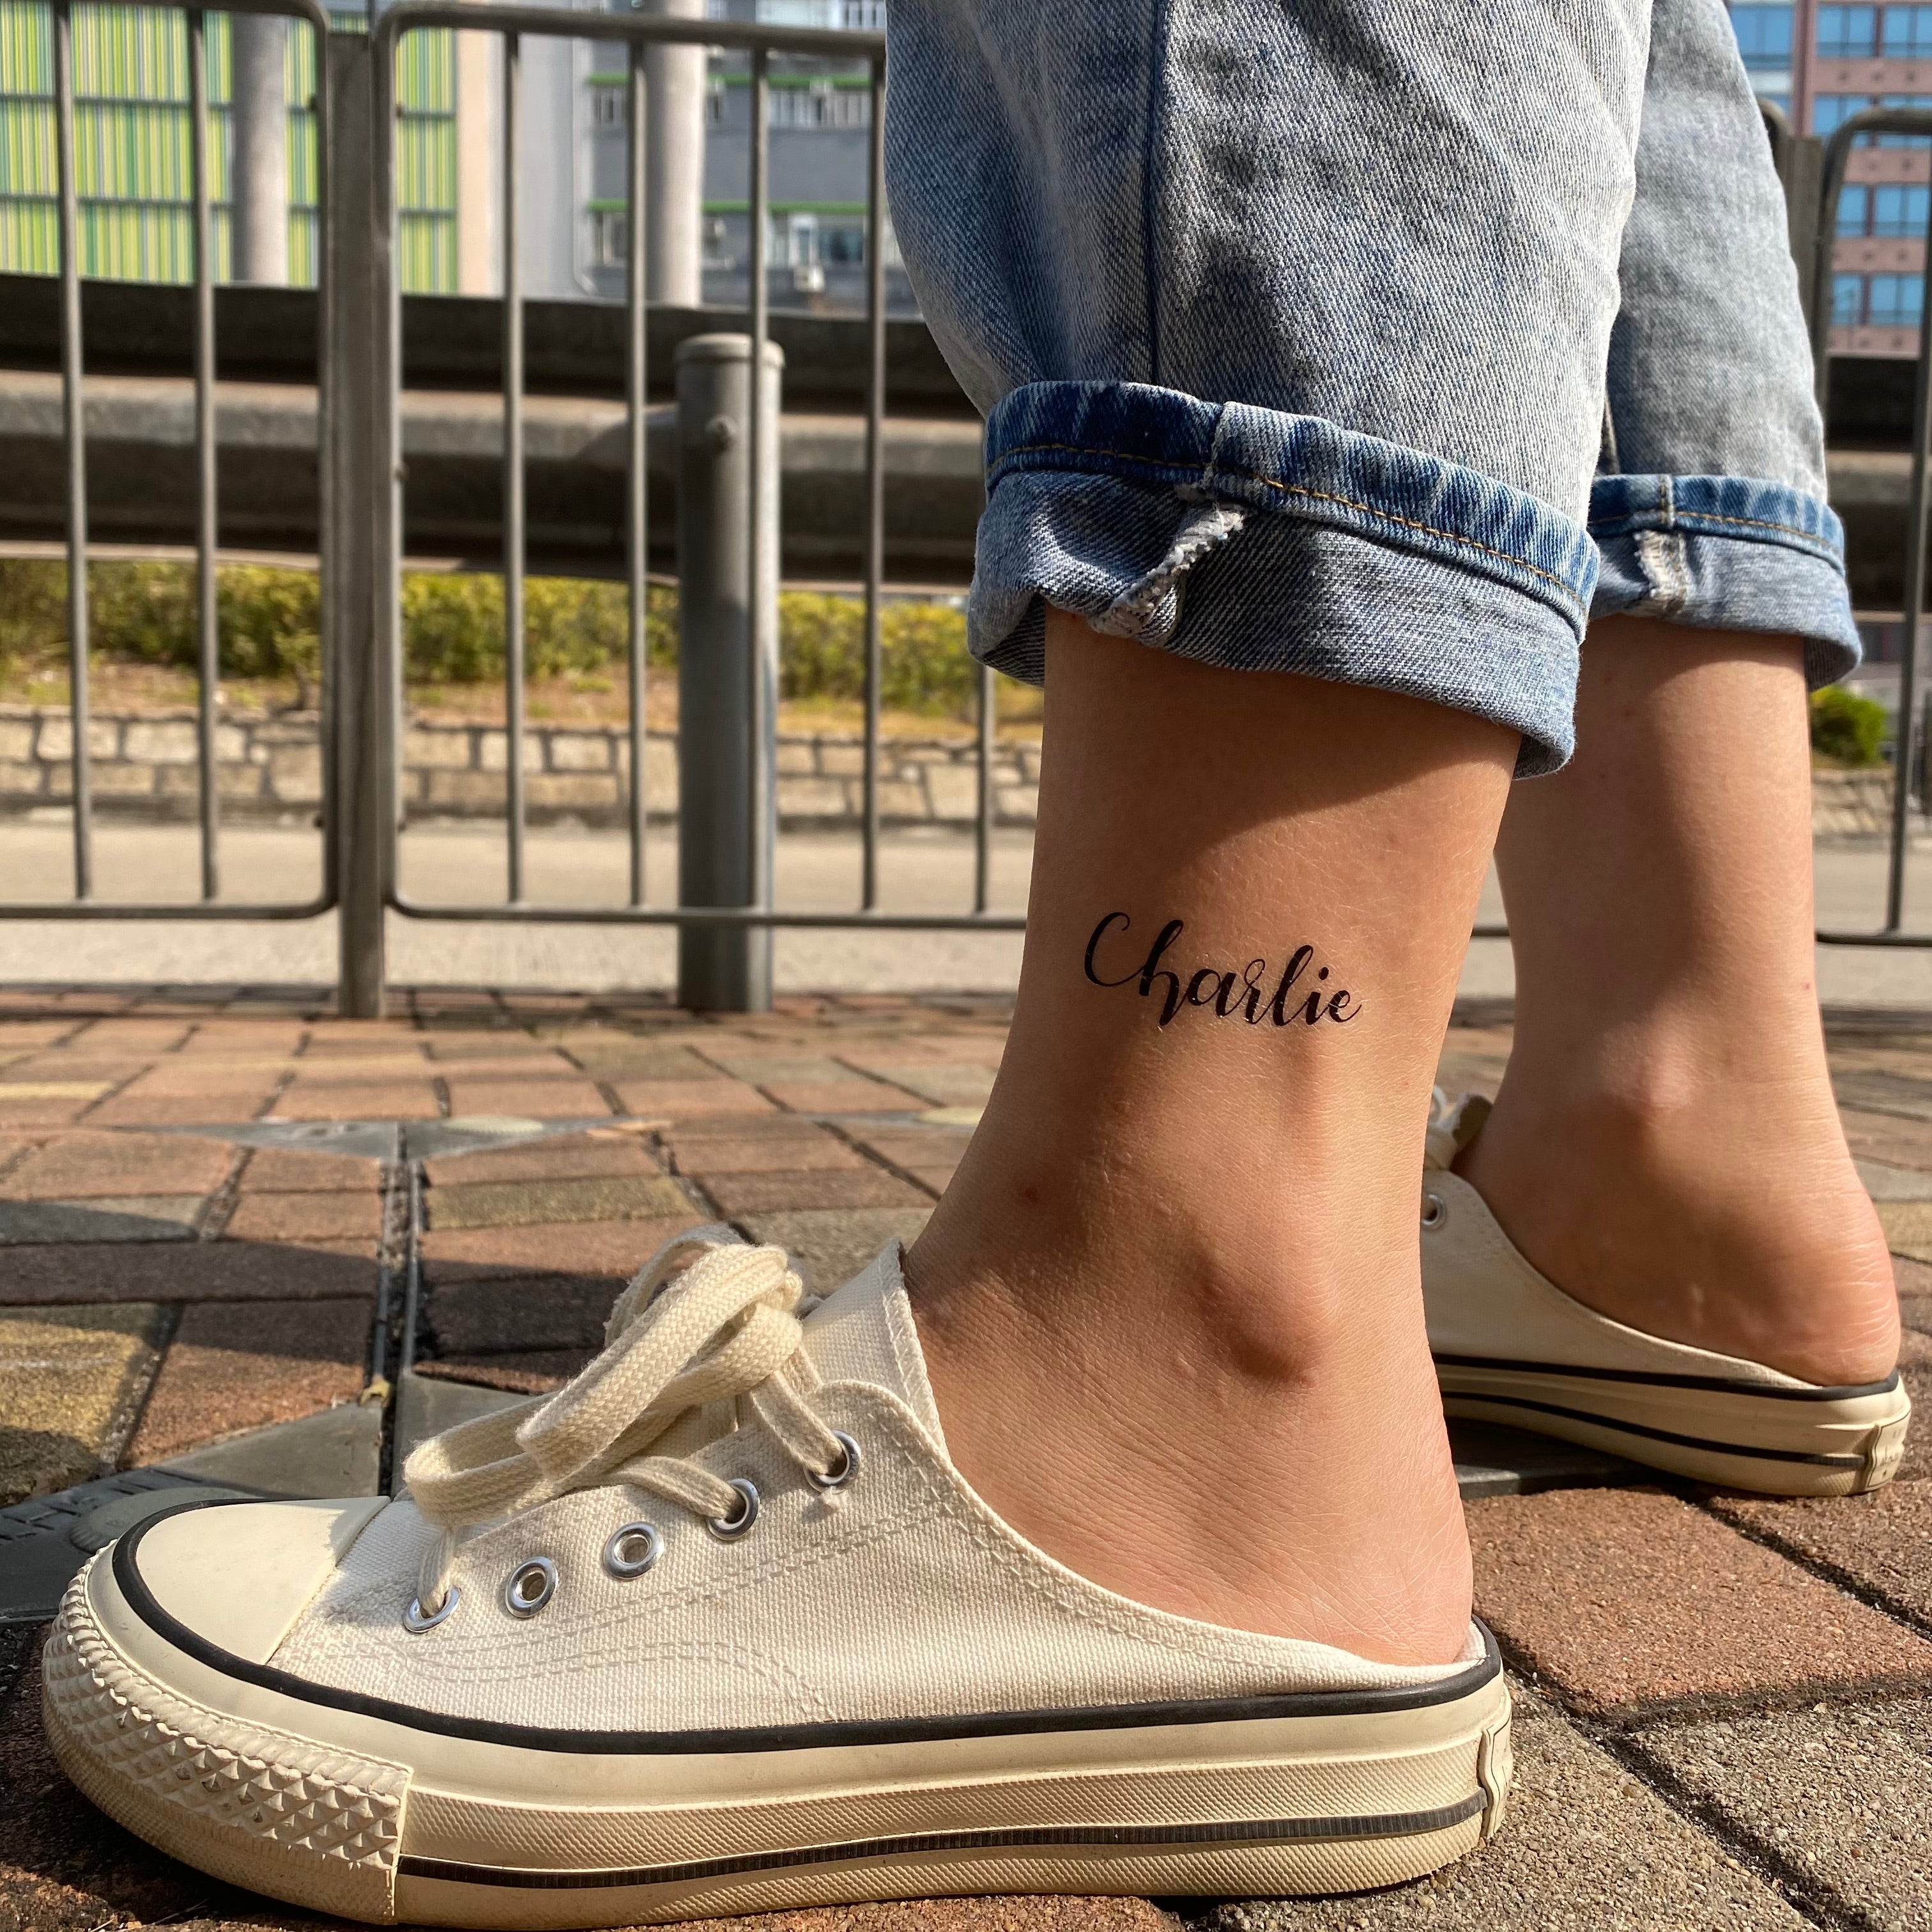 Charlie Name Temporary Tattoo Sticker - OhMyTat